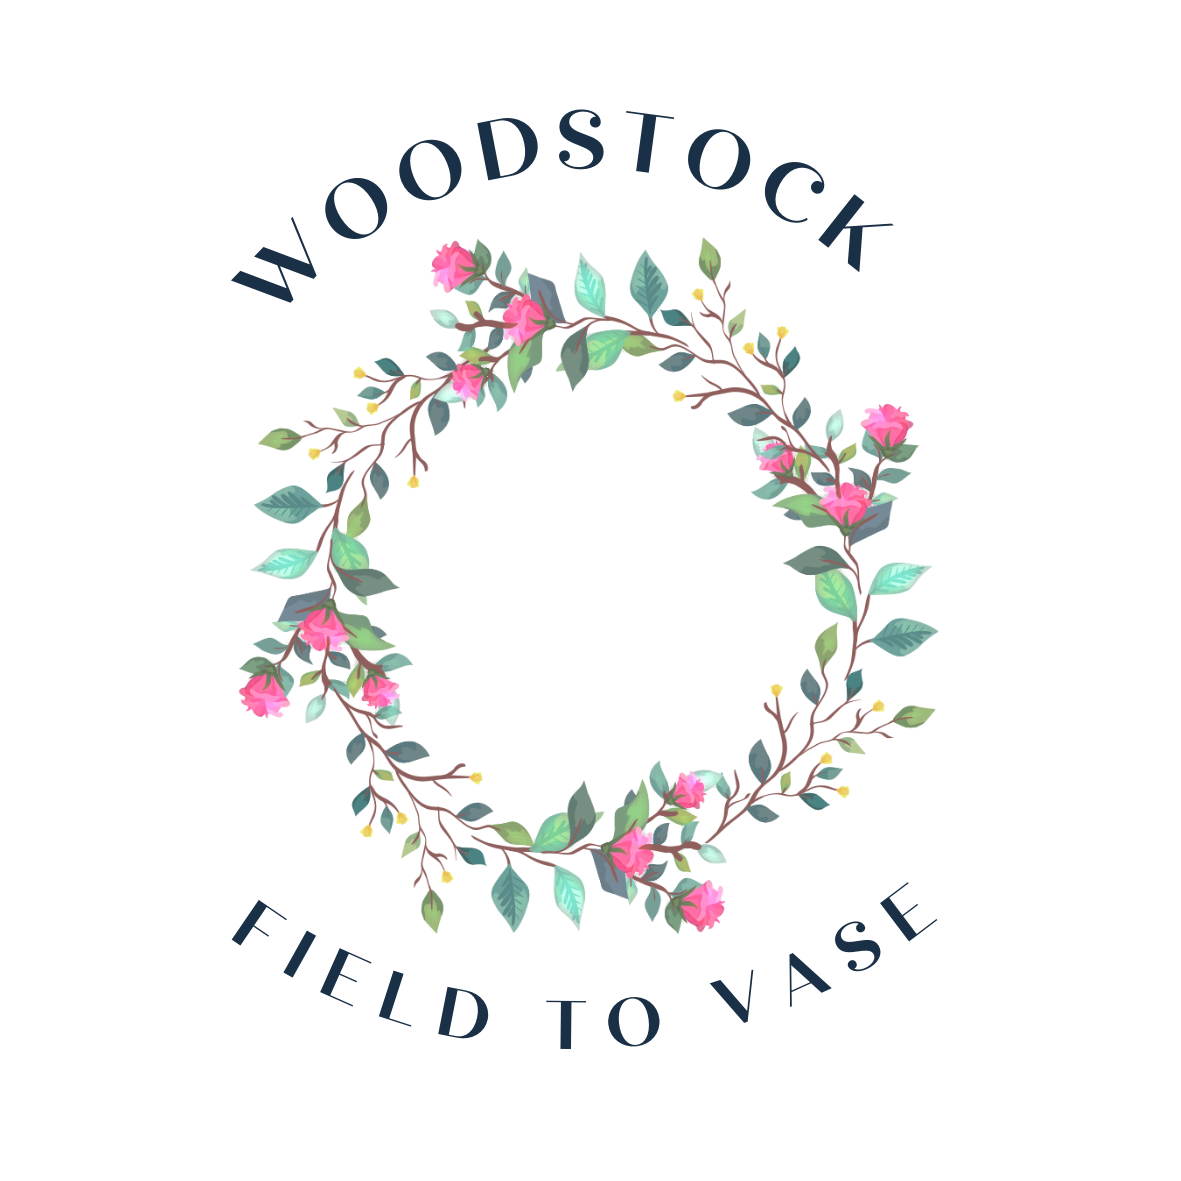 Woodstock Field to Vase.png